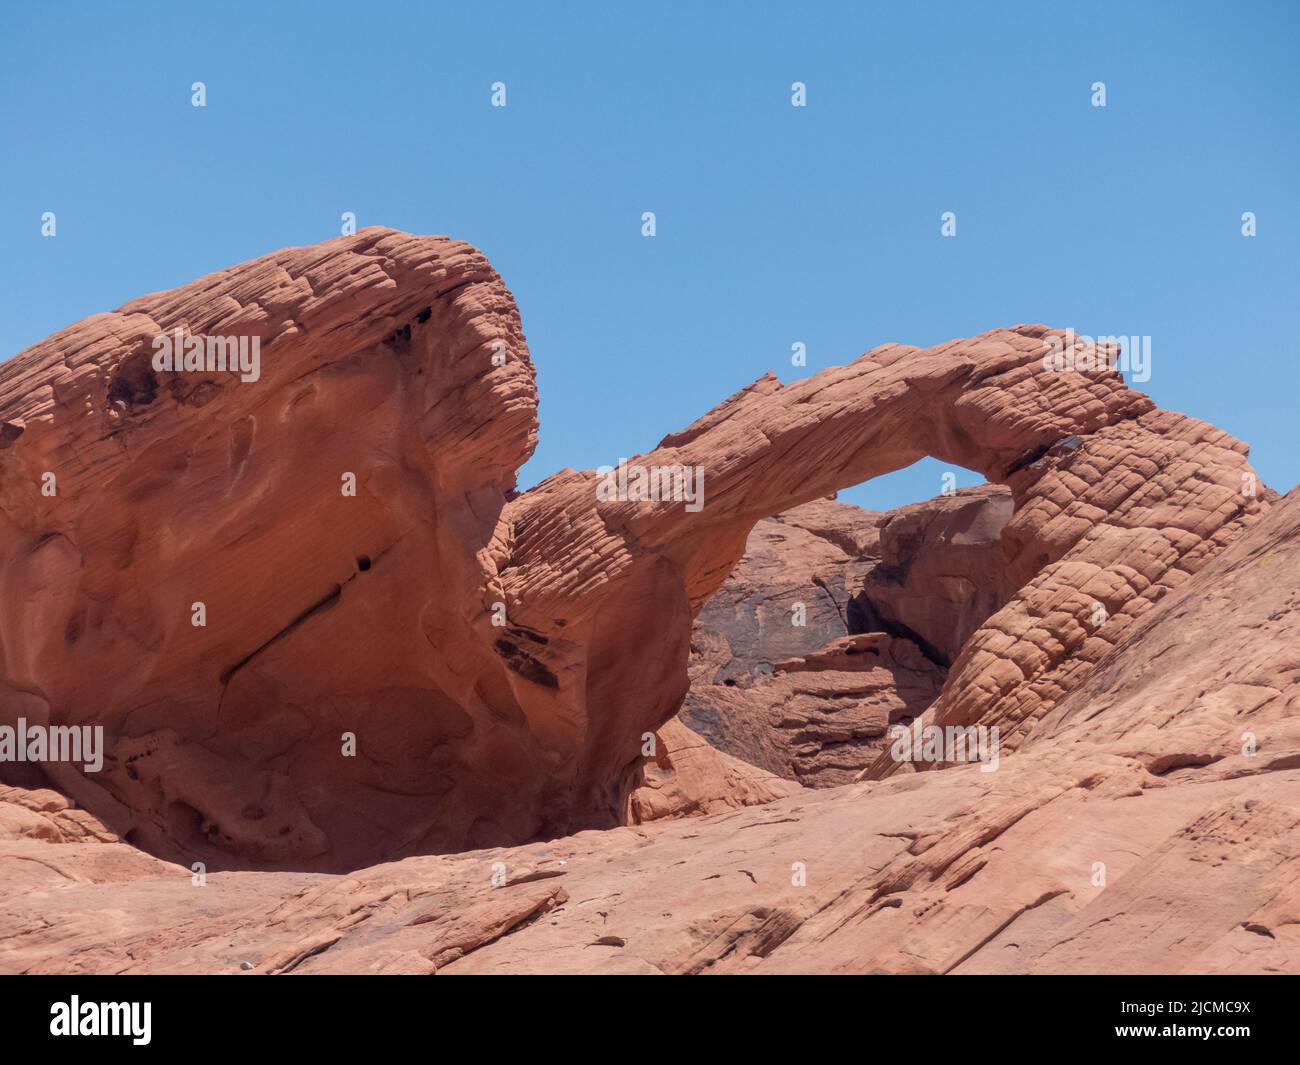 Valley of Fire State Park, Nevada, États-Unis : les formations rocheuses étranges. Banque D'Images